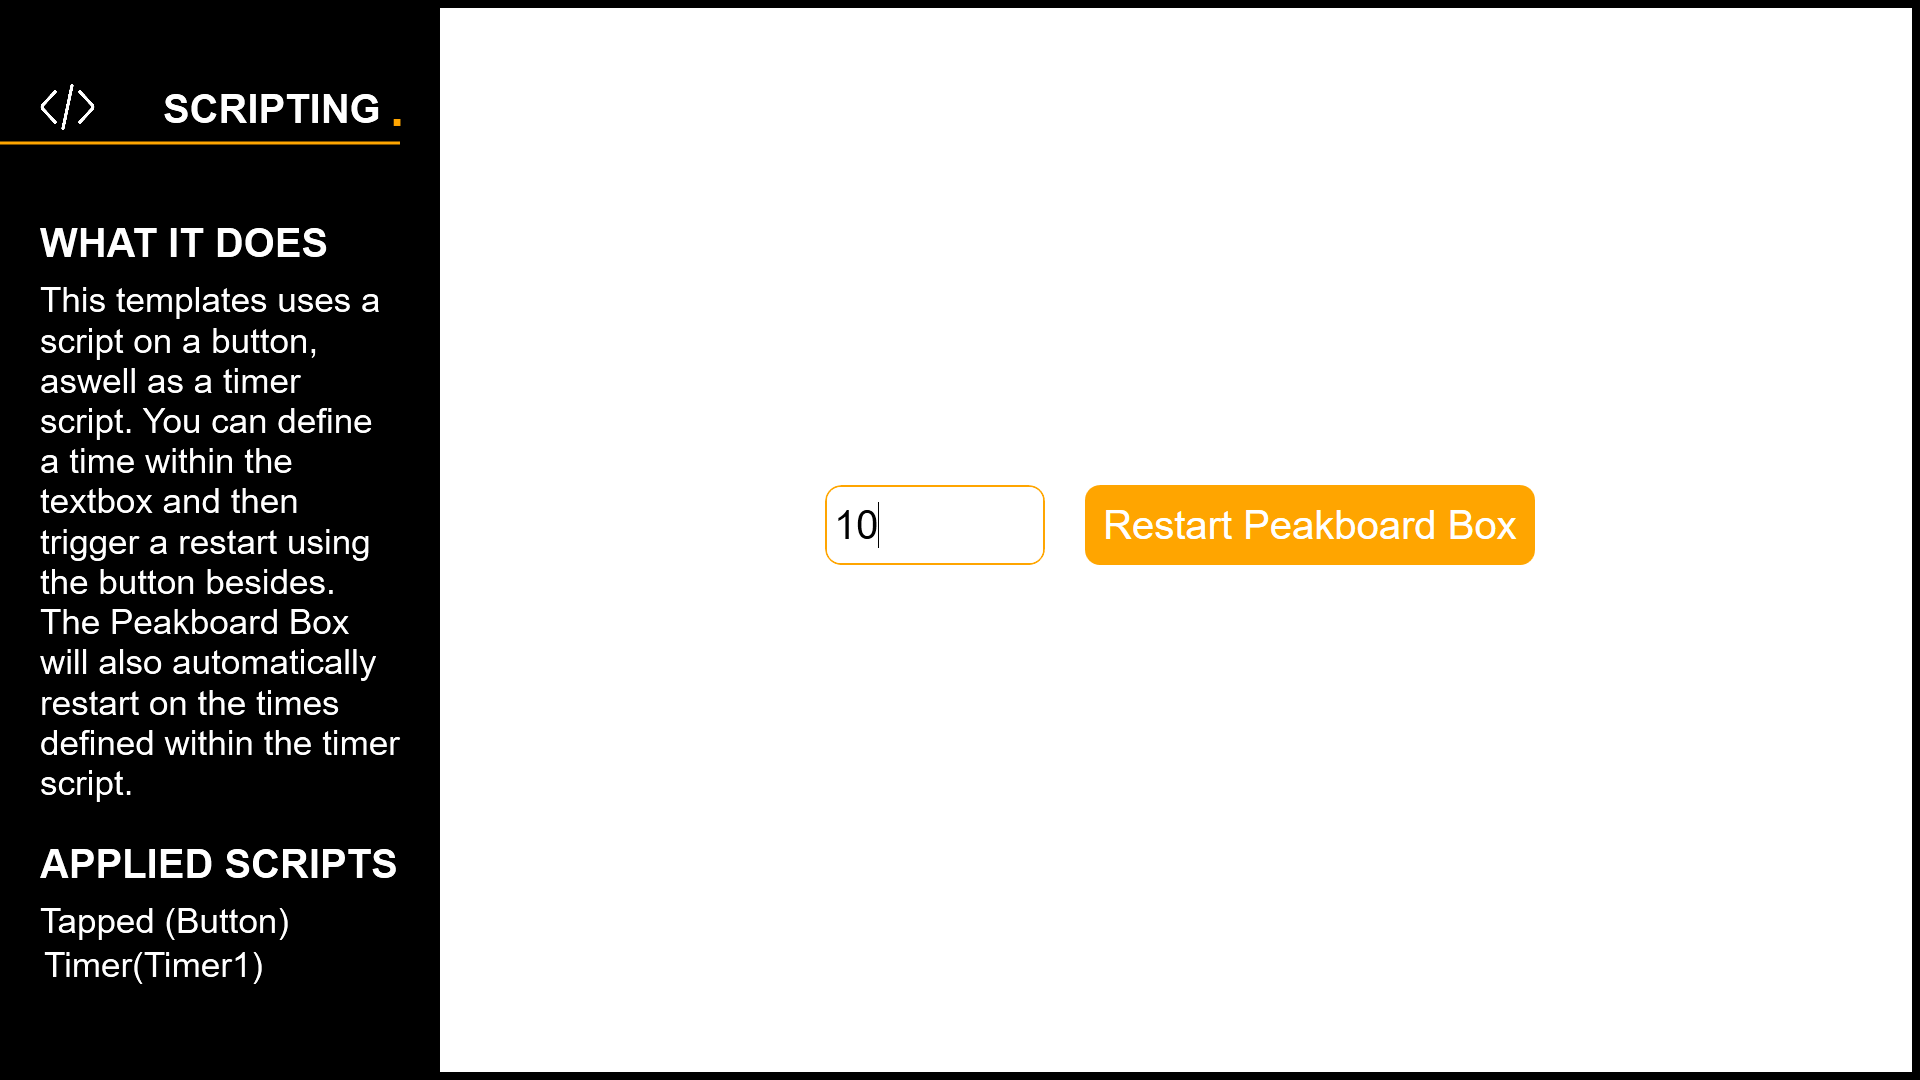 Restarting Peakboard Box